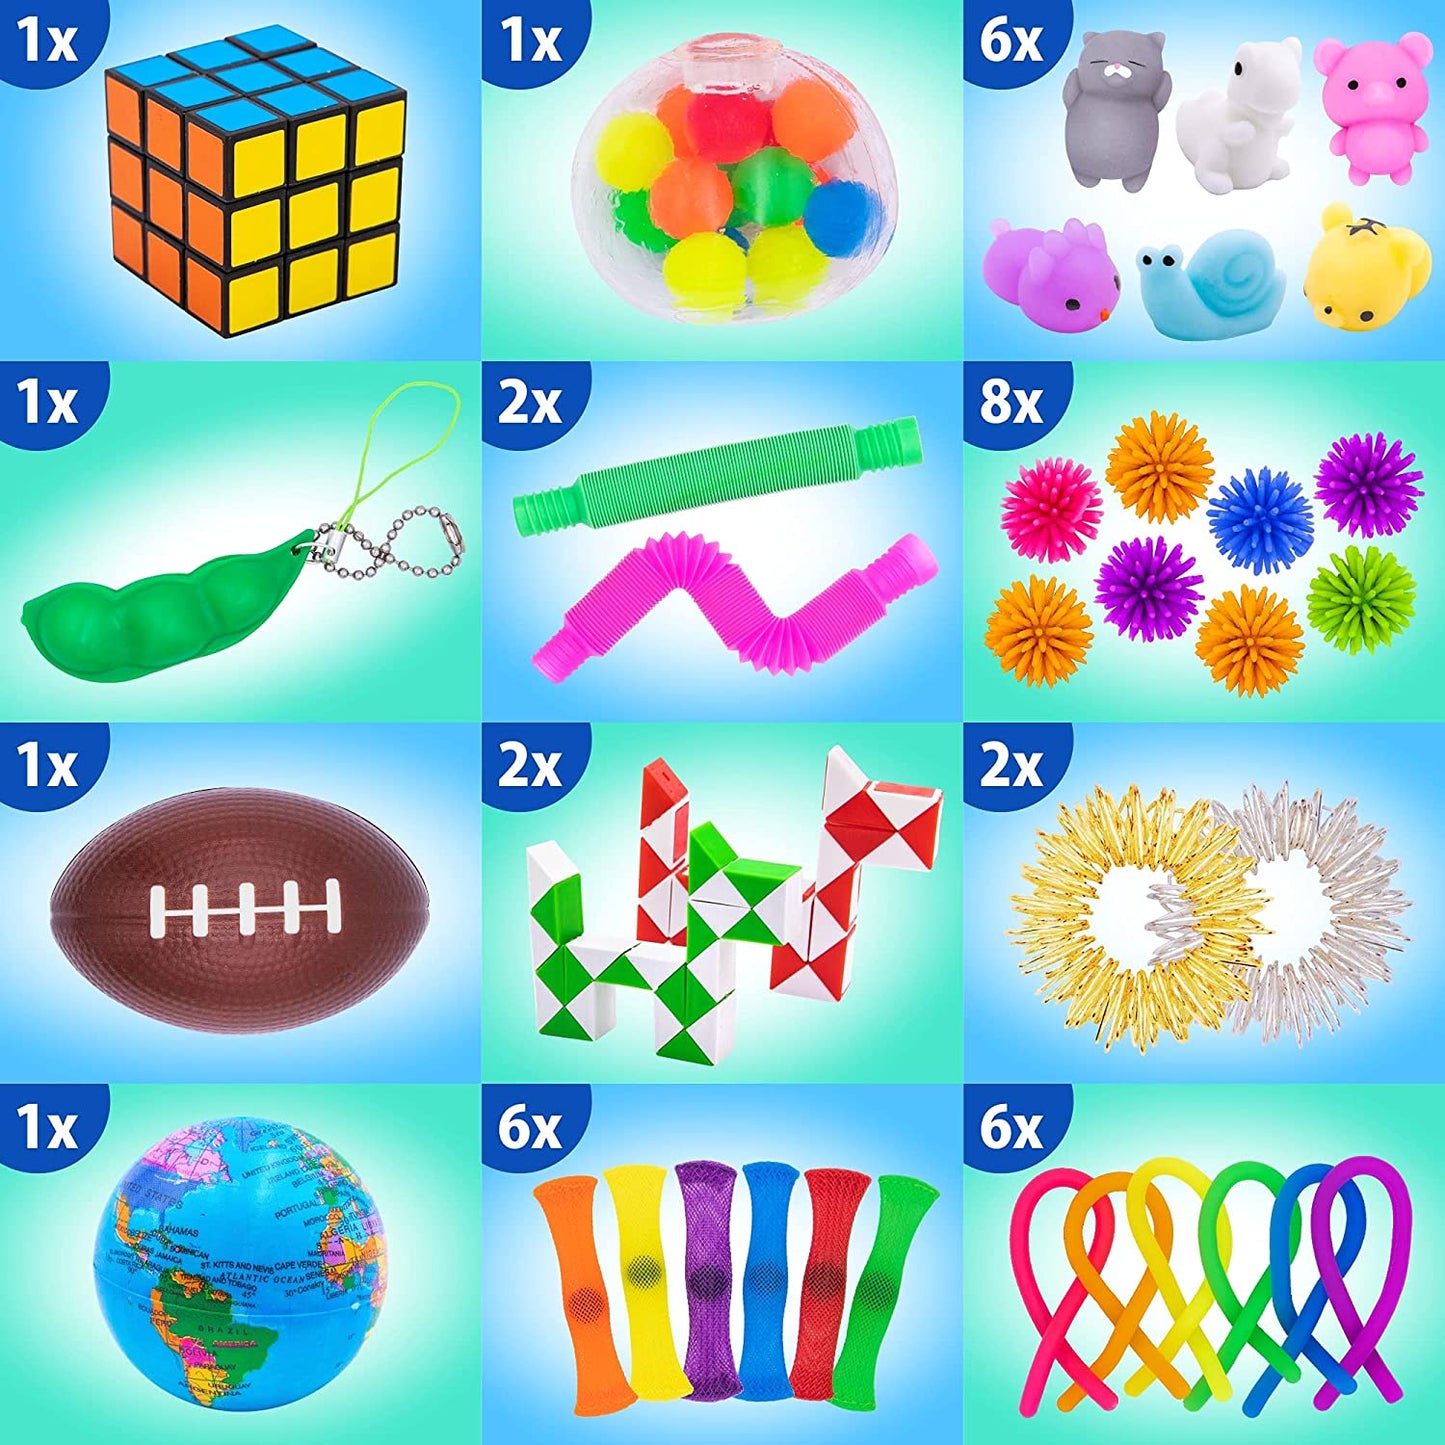 50 Pcs Fidget Pack - Party Favors Gifts for Kids, Adults & Autistics - Stress Relief Autism Sensory Toy - Fidget Toys Bulk for Classroom Treasure Box Prizes - Pop Its Fidgets Stocking Stuffers